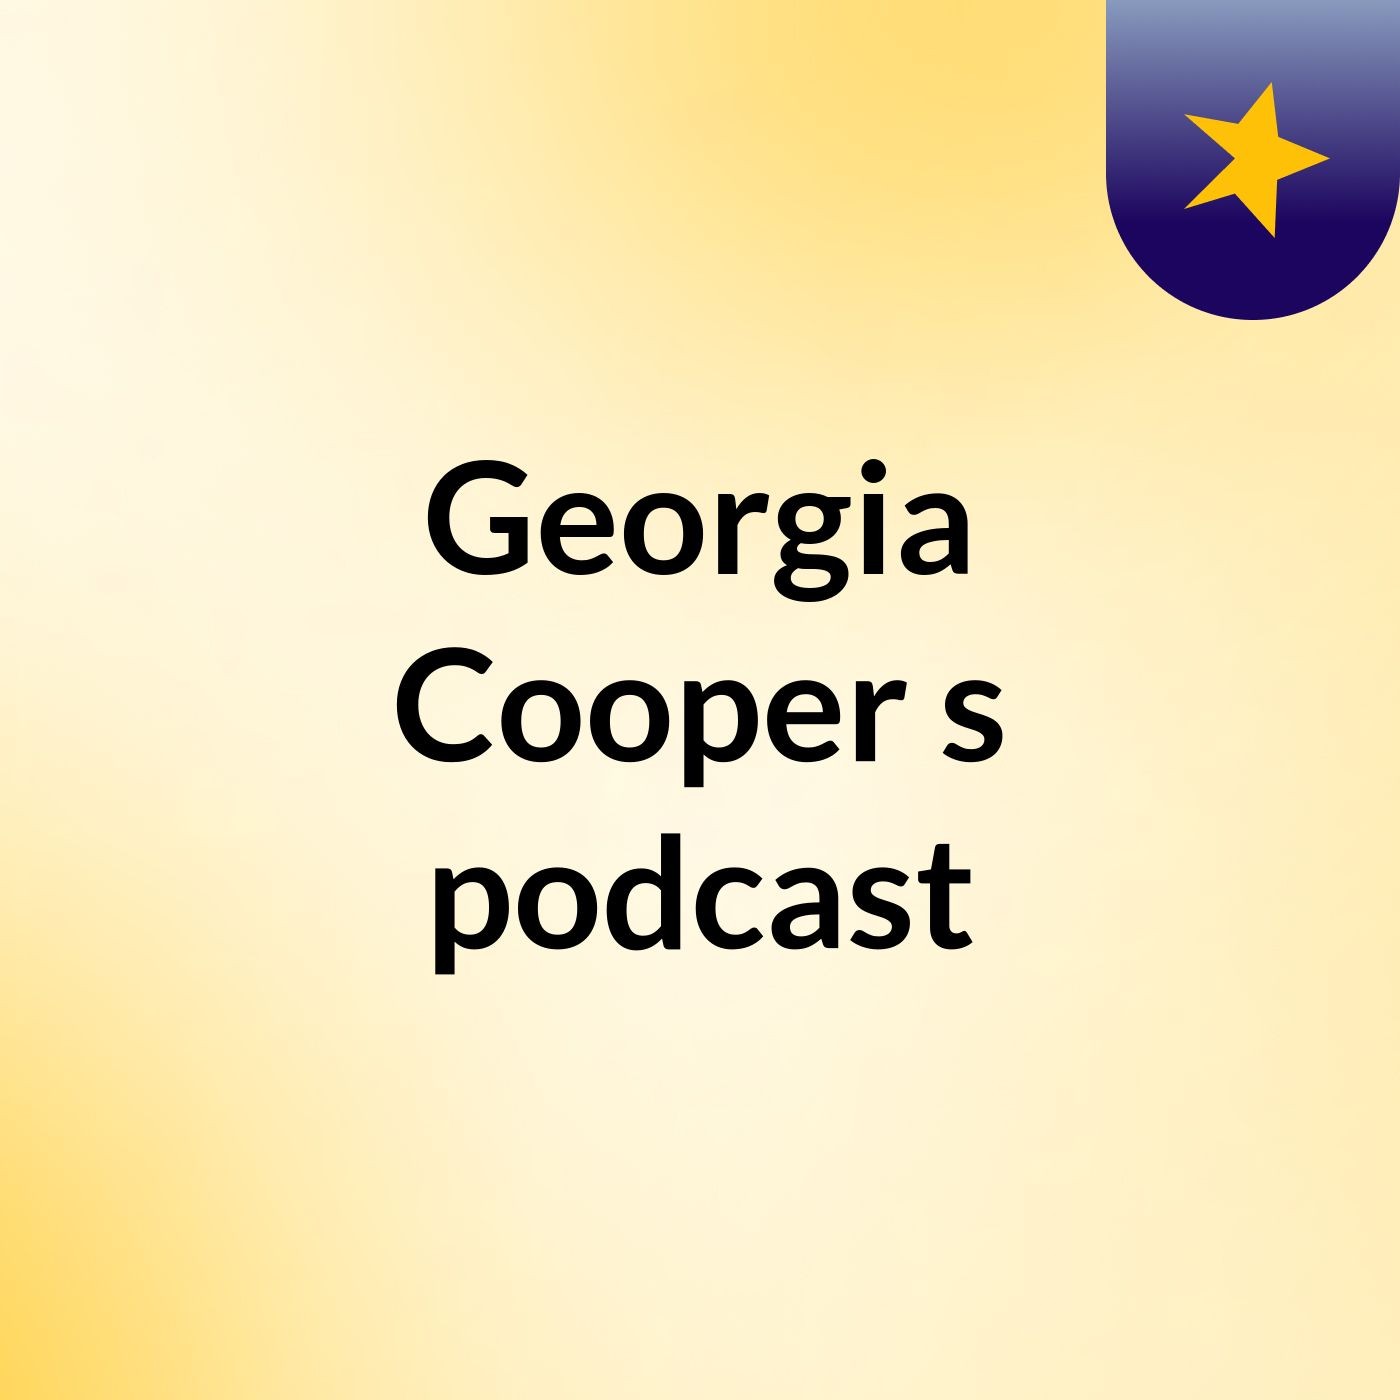 Georgia Cooper's podcast